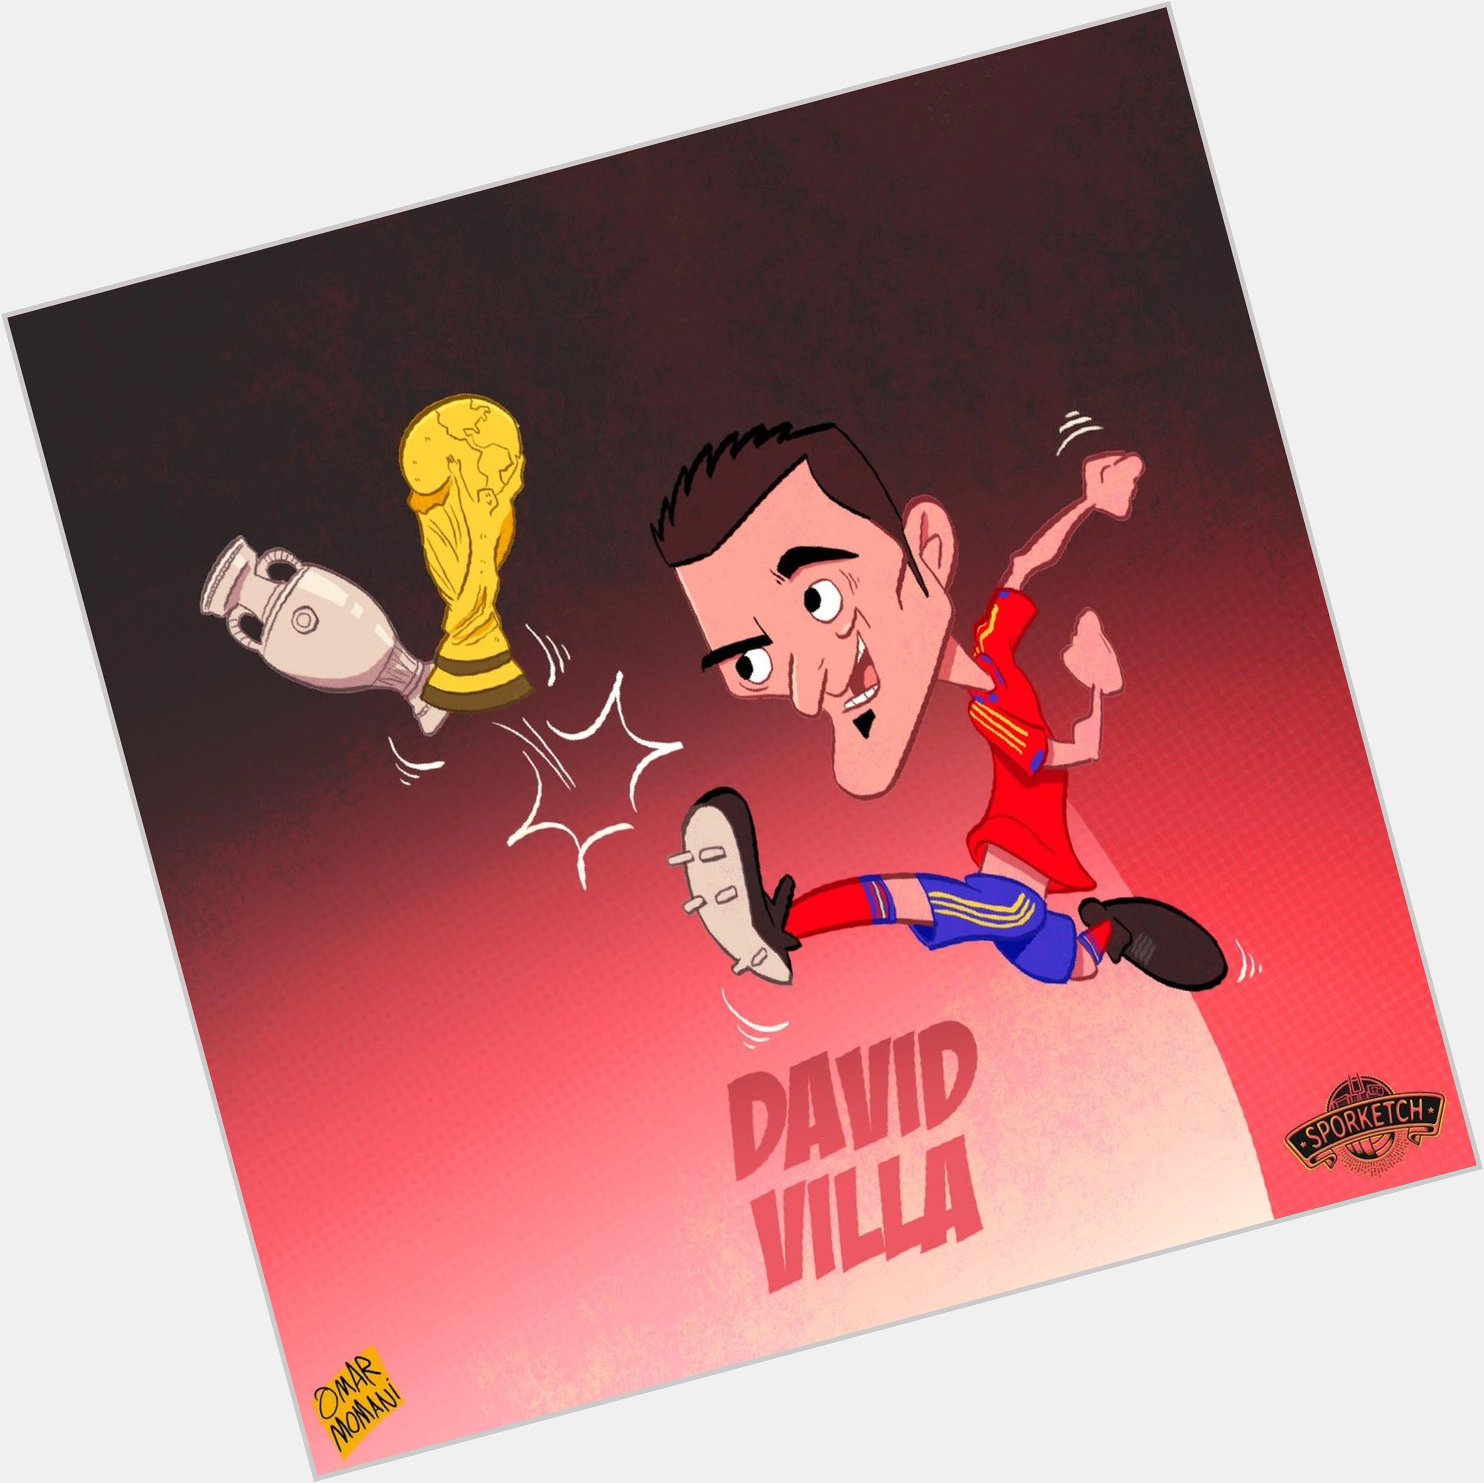 Happy birthday David Villa 